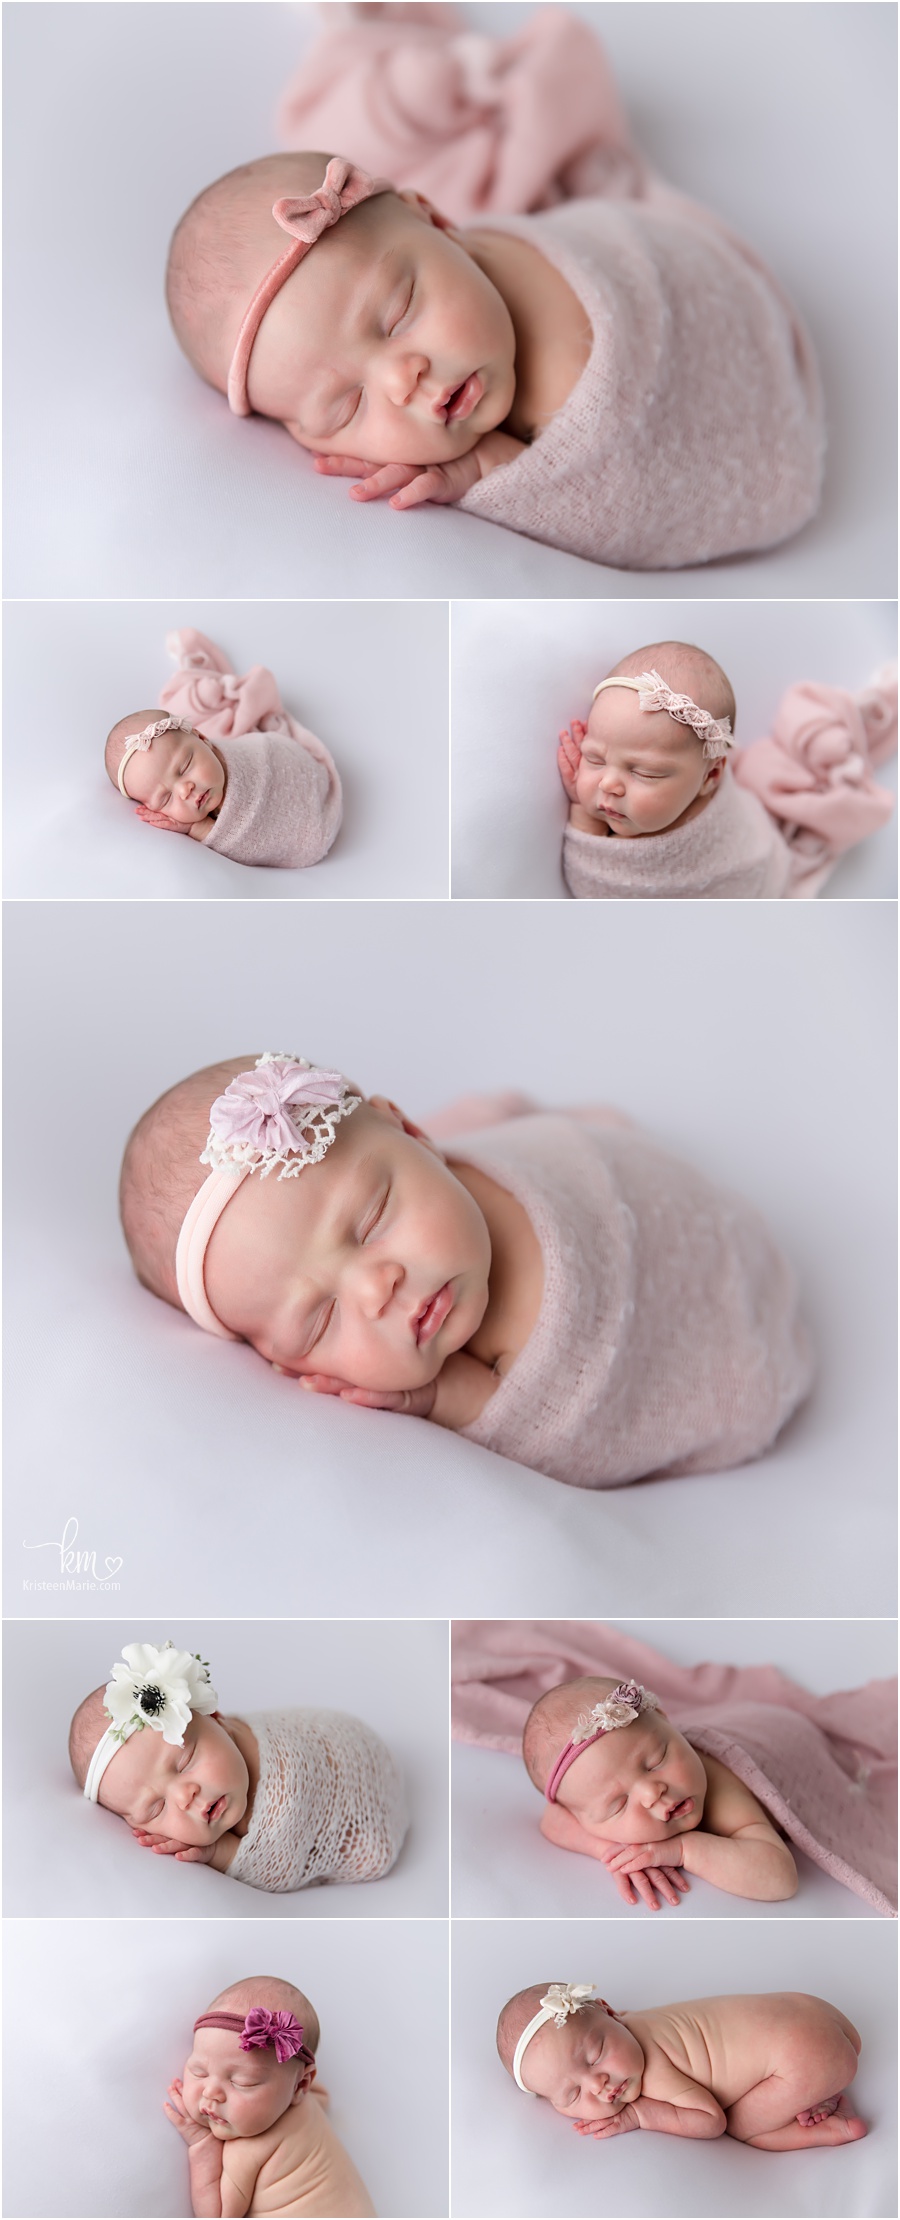 newborn photography - pretty in pink - blush